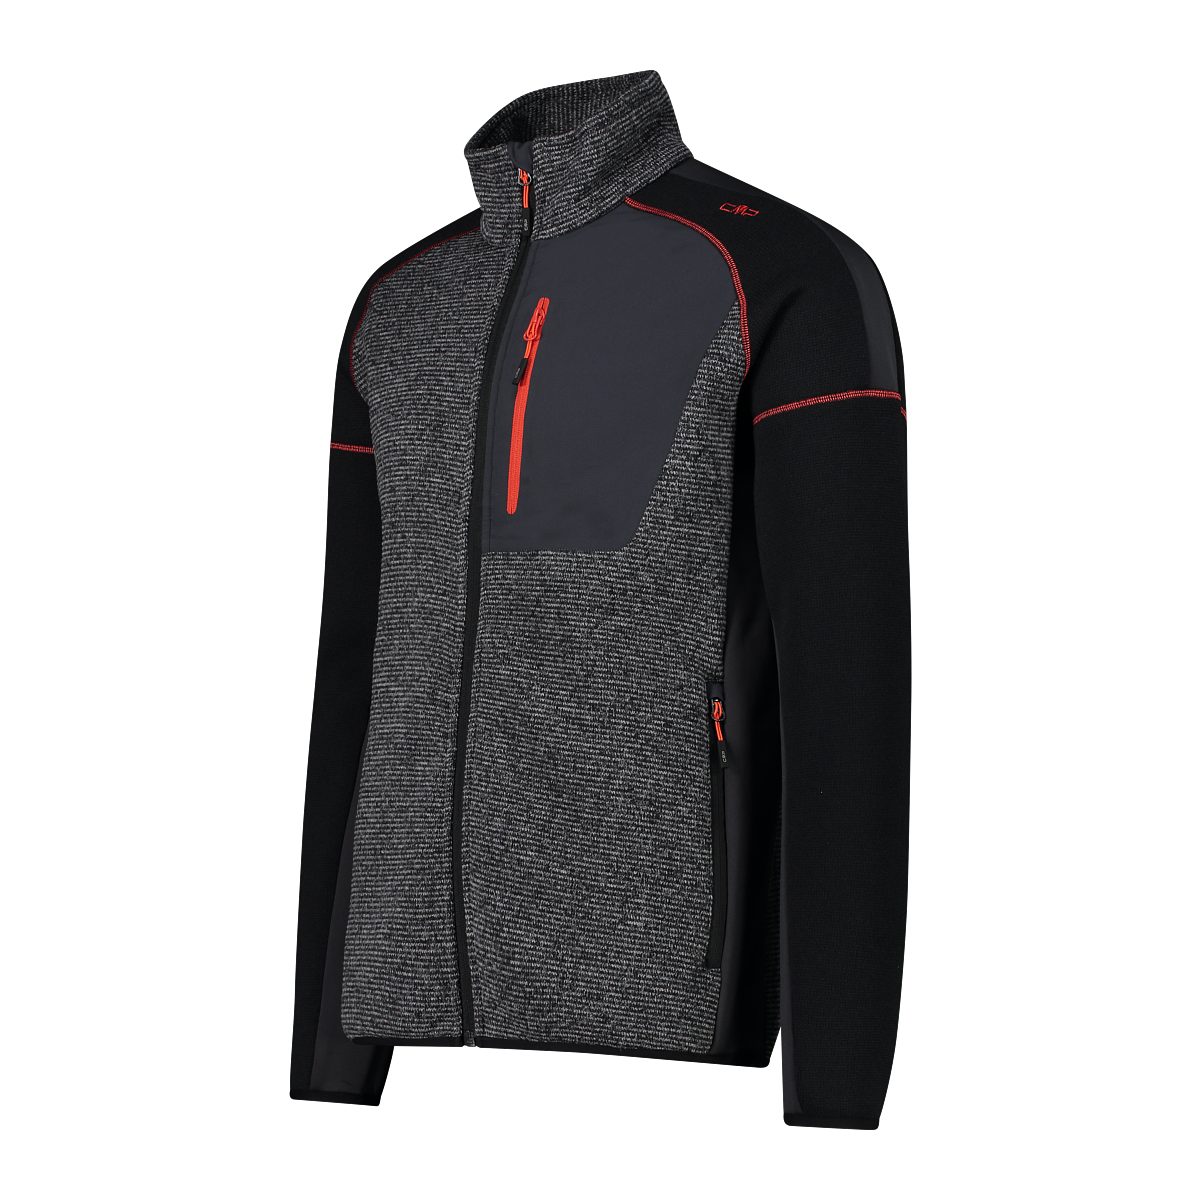 Fleece / Man speziell nero CMP 49PU Jacket Knit-Tech Sweatjacke grey verarbeitetes Fleece